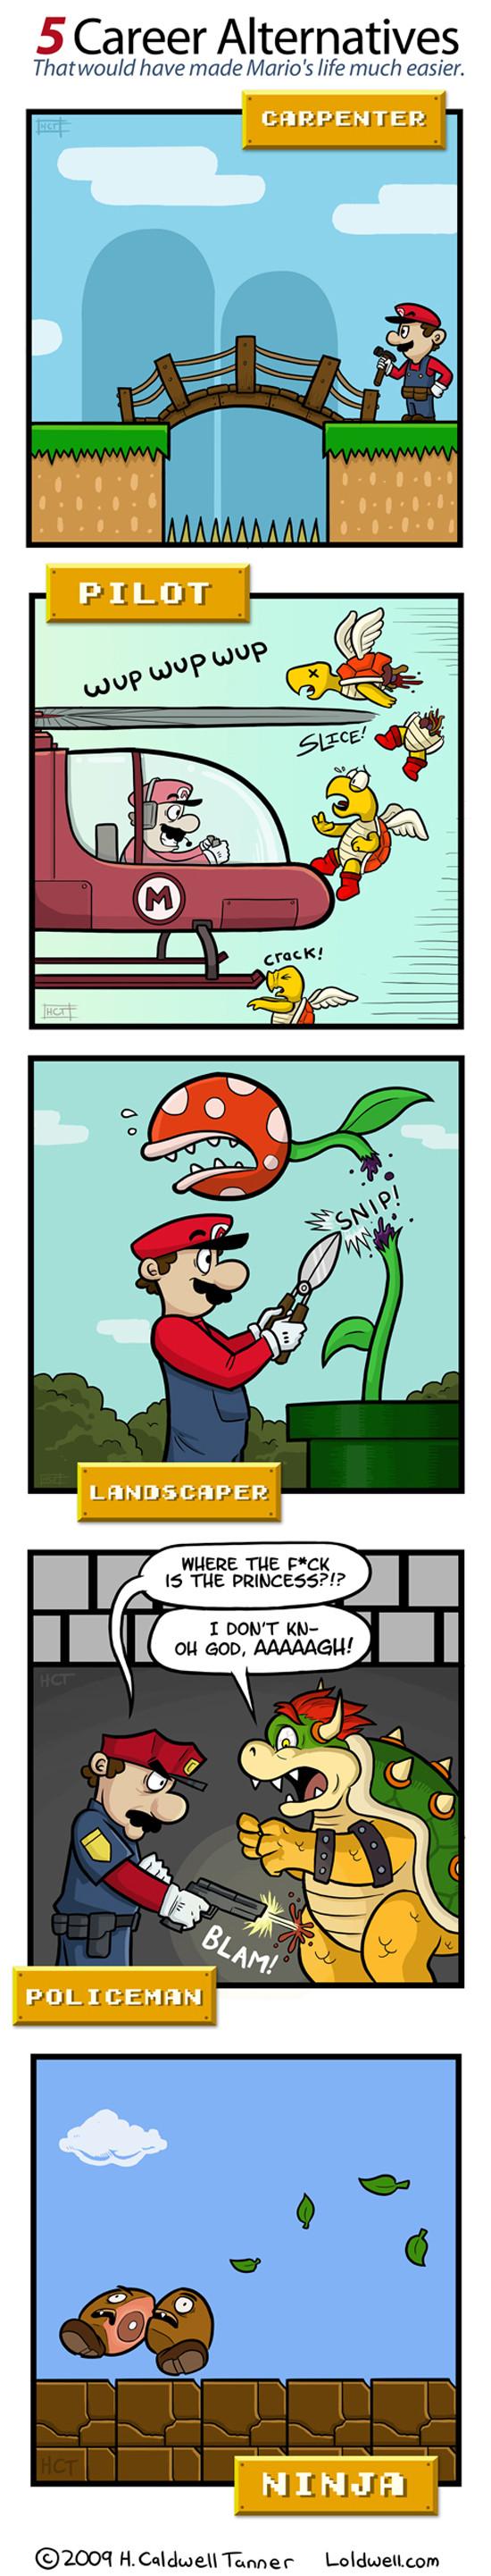 Les 5 métiers Alternatifs de Mario 1